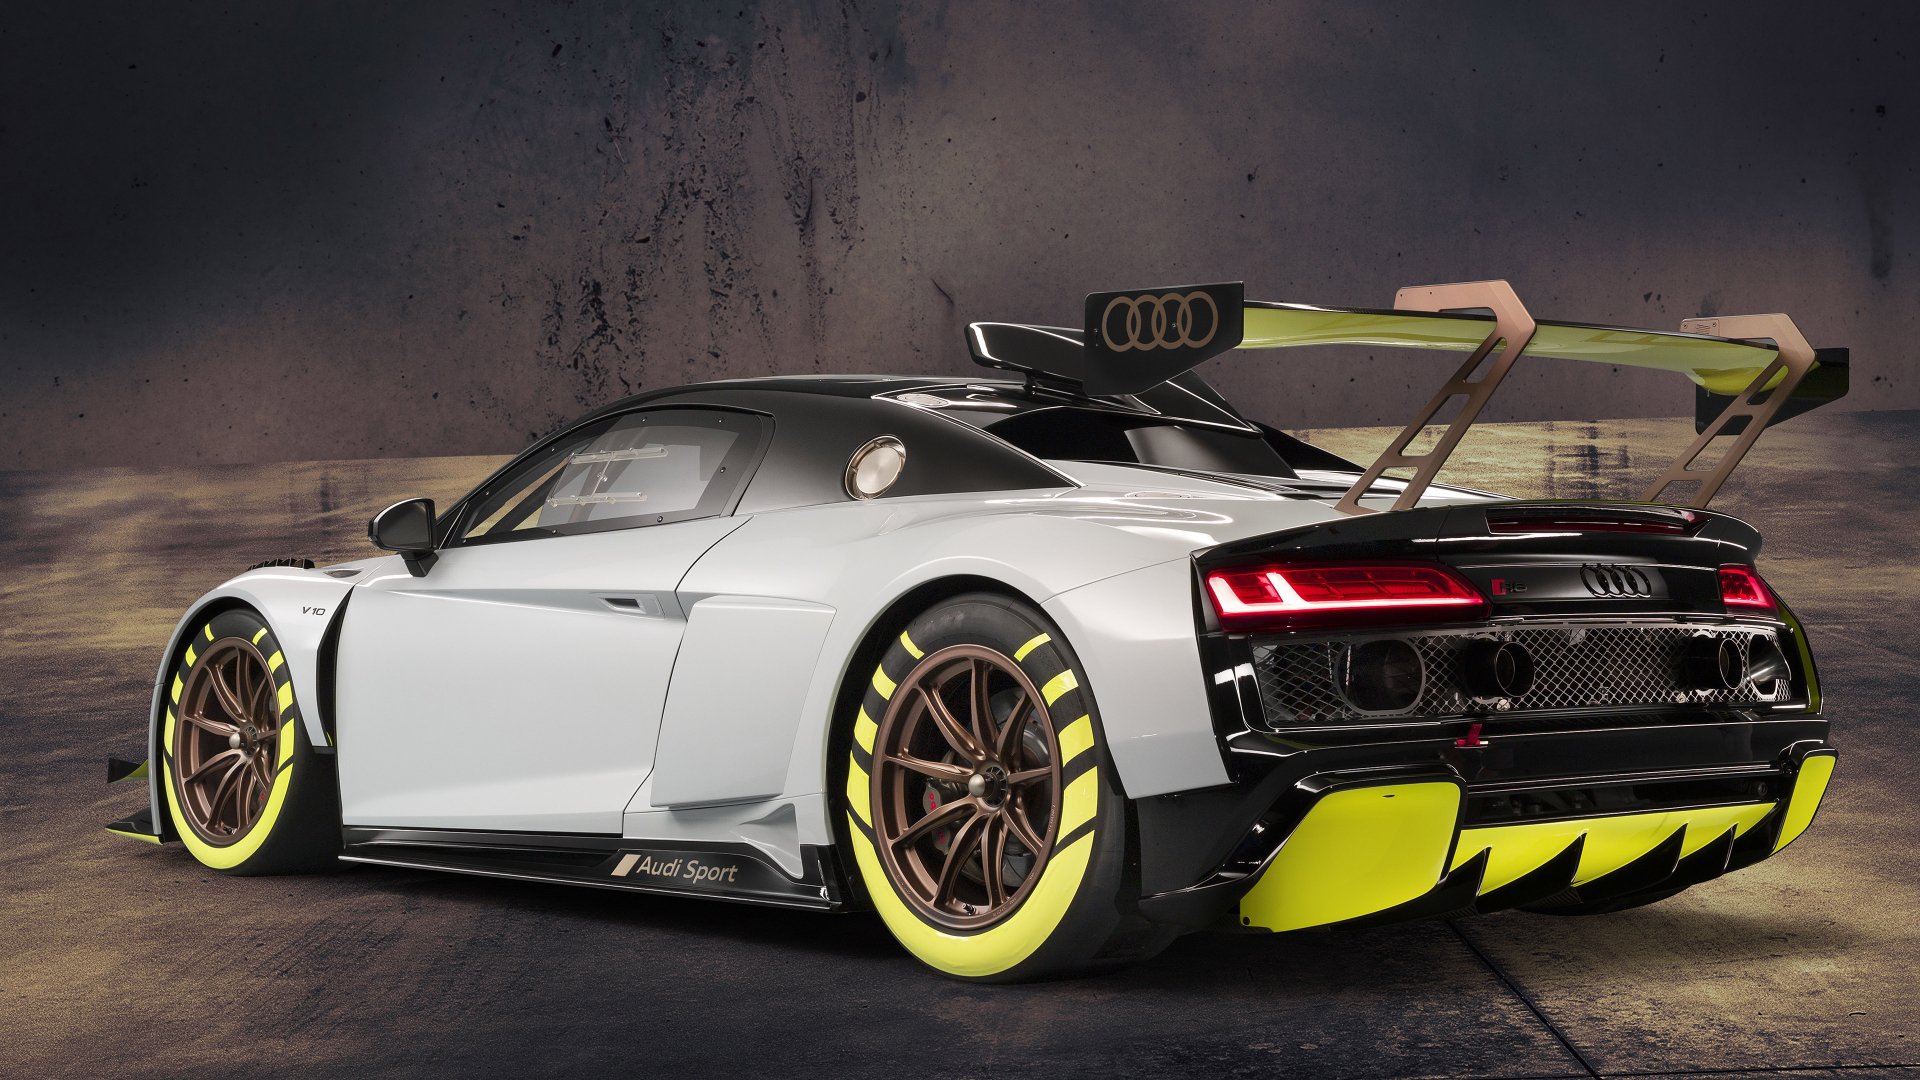 The Ultimate Race Car: 2020 Audi R8 LMS GT2